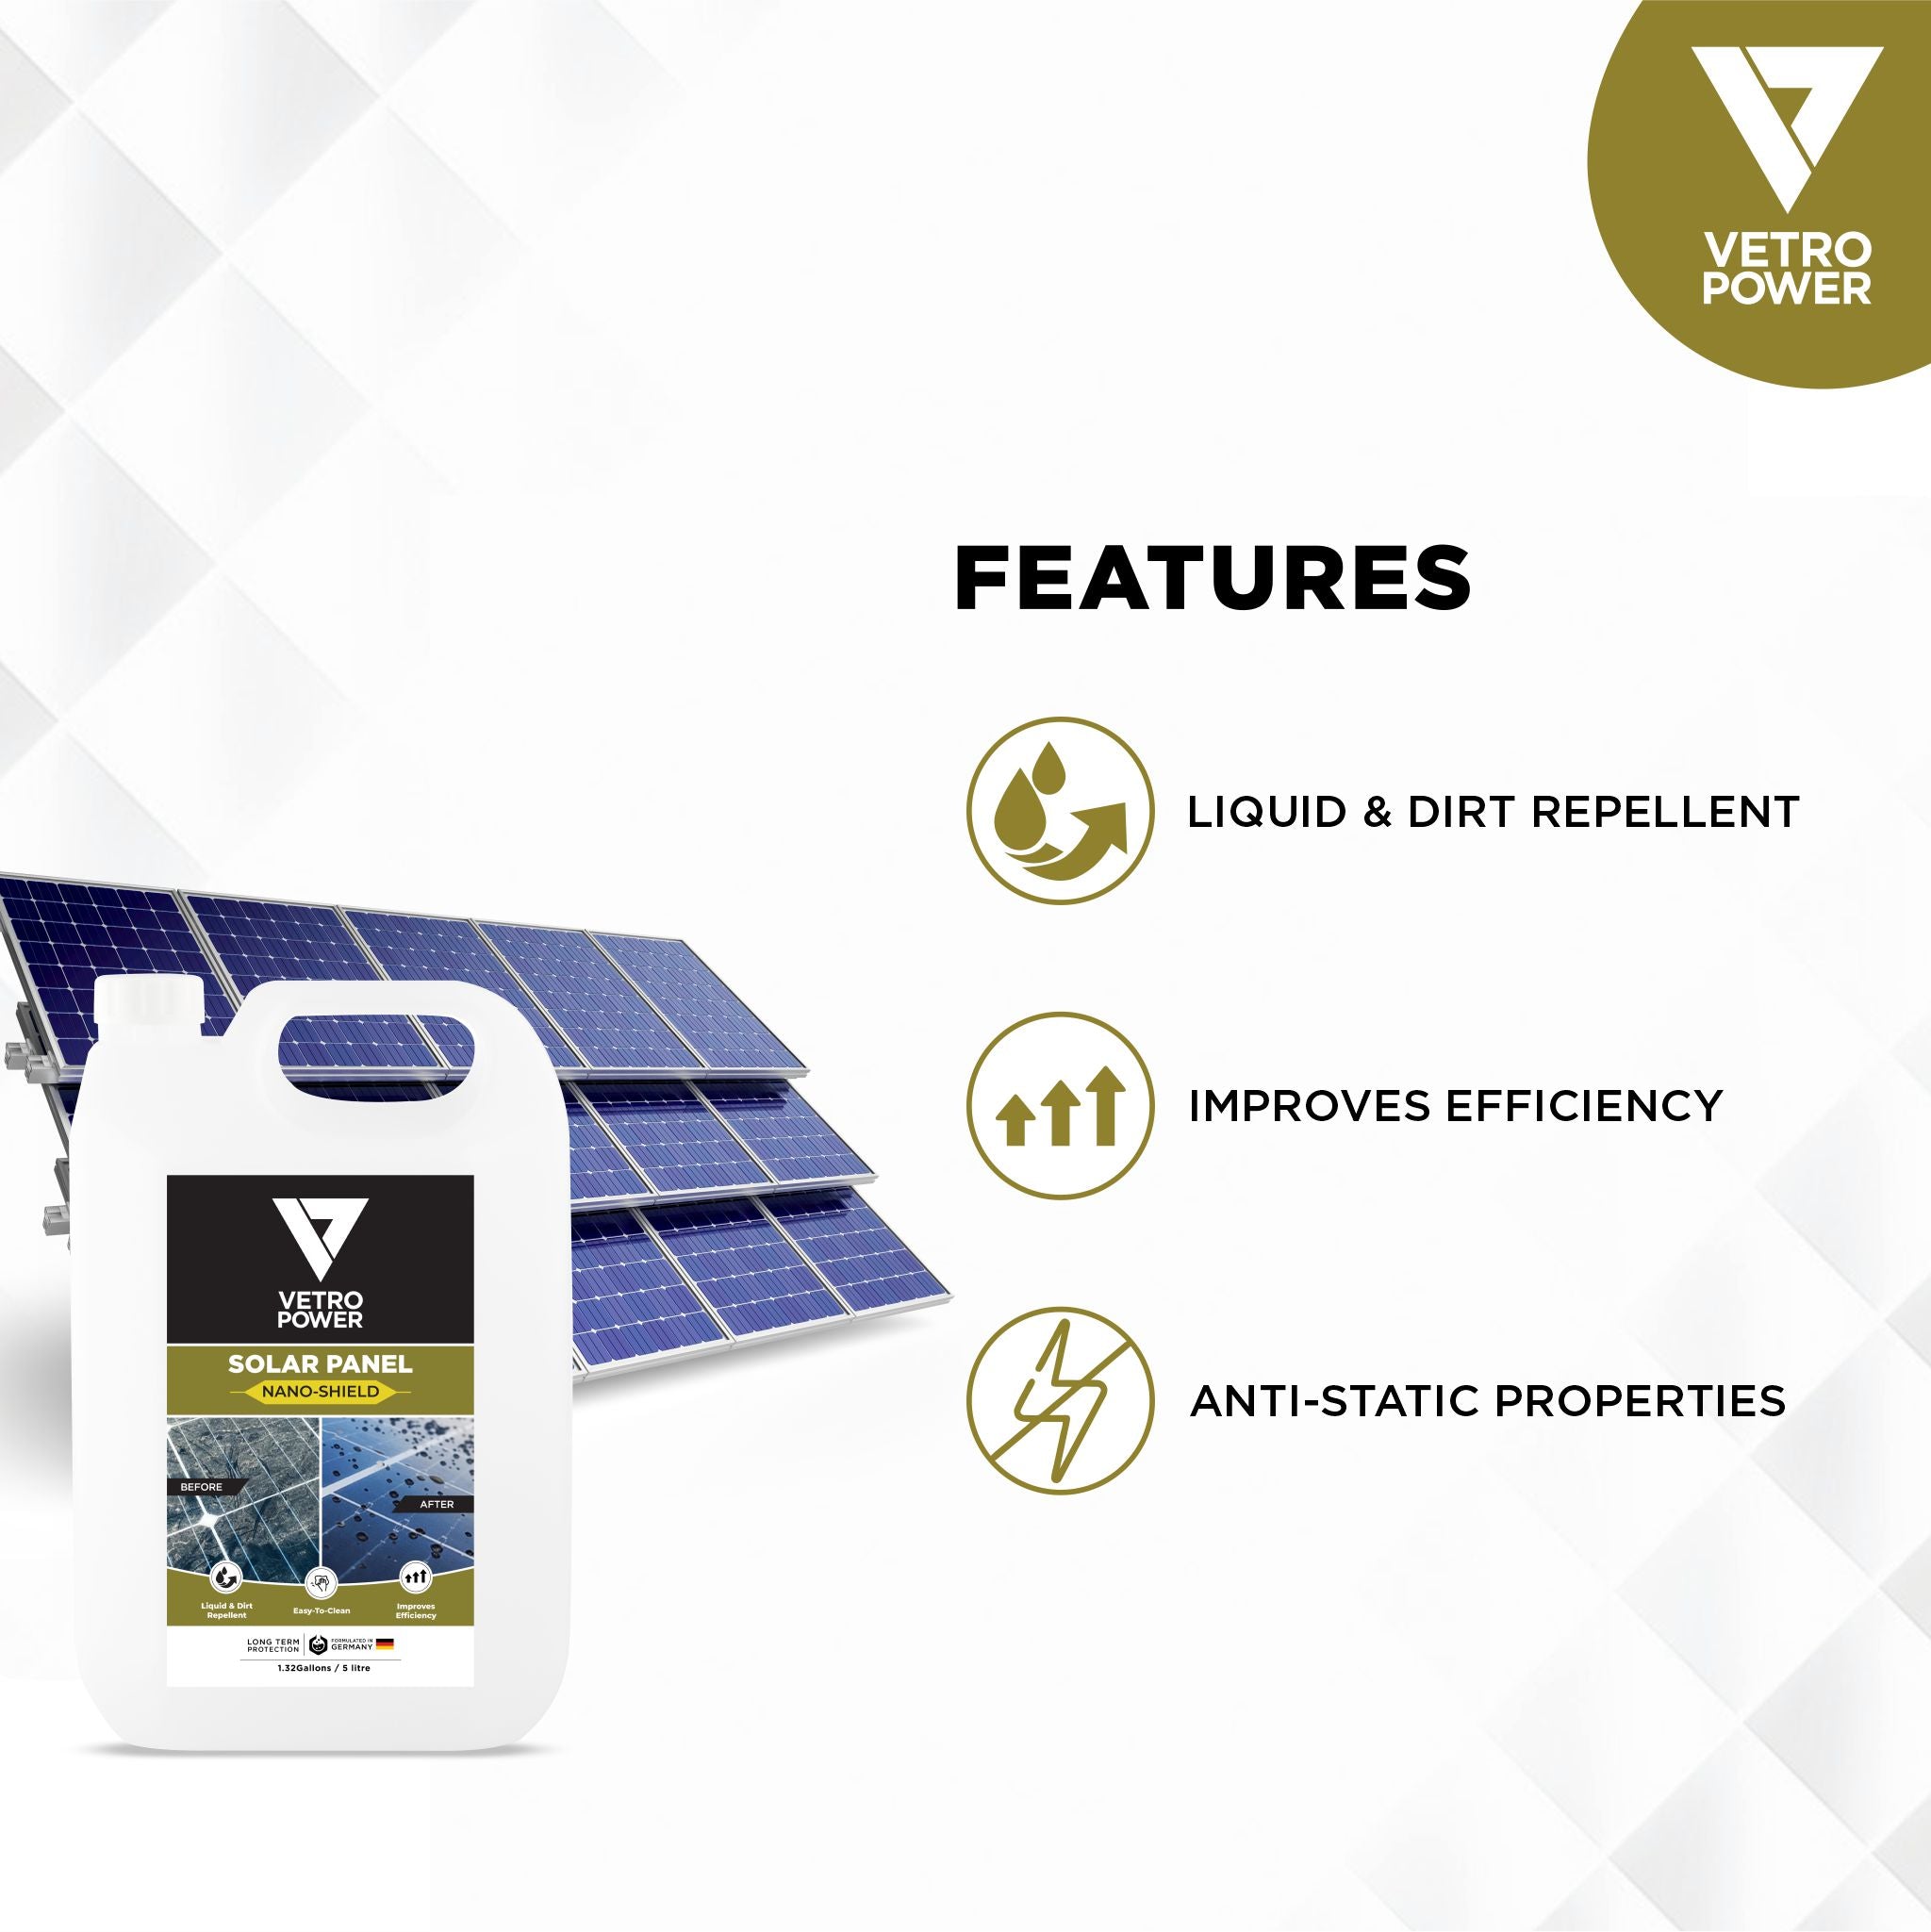 Vetro Power Solar Panel Nano-shield